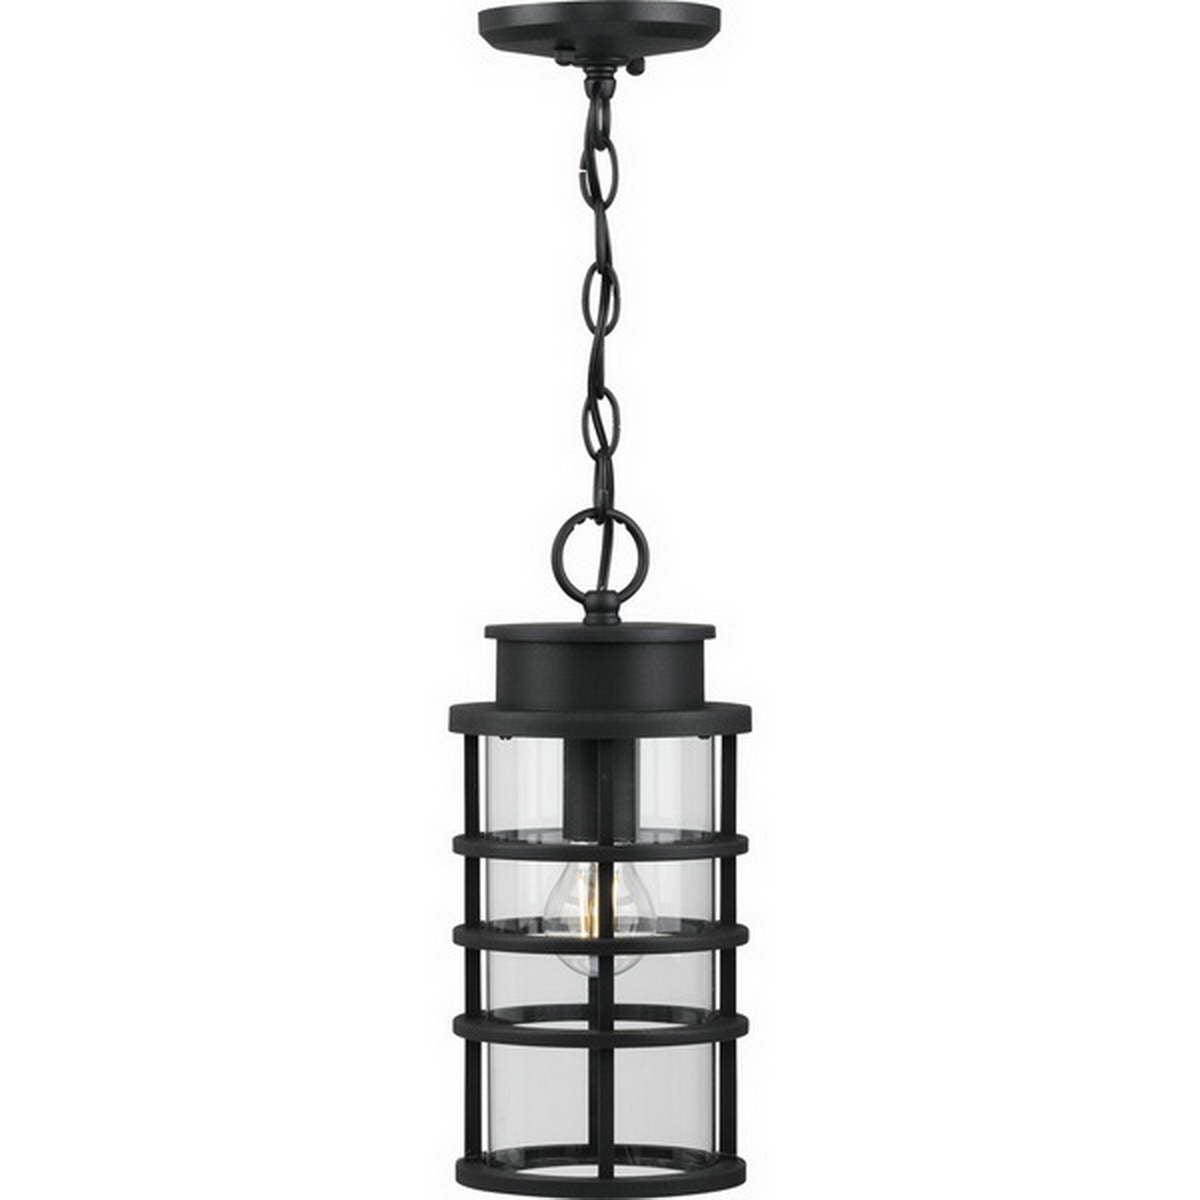 Port Royal 14 in. Outdoor Hanging Lantern Black Finish